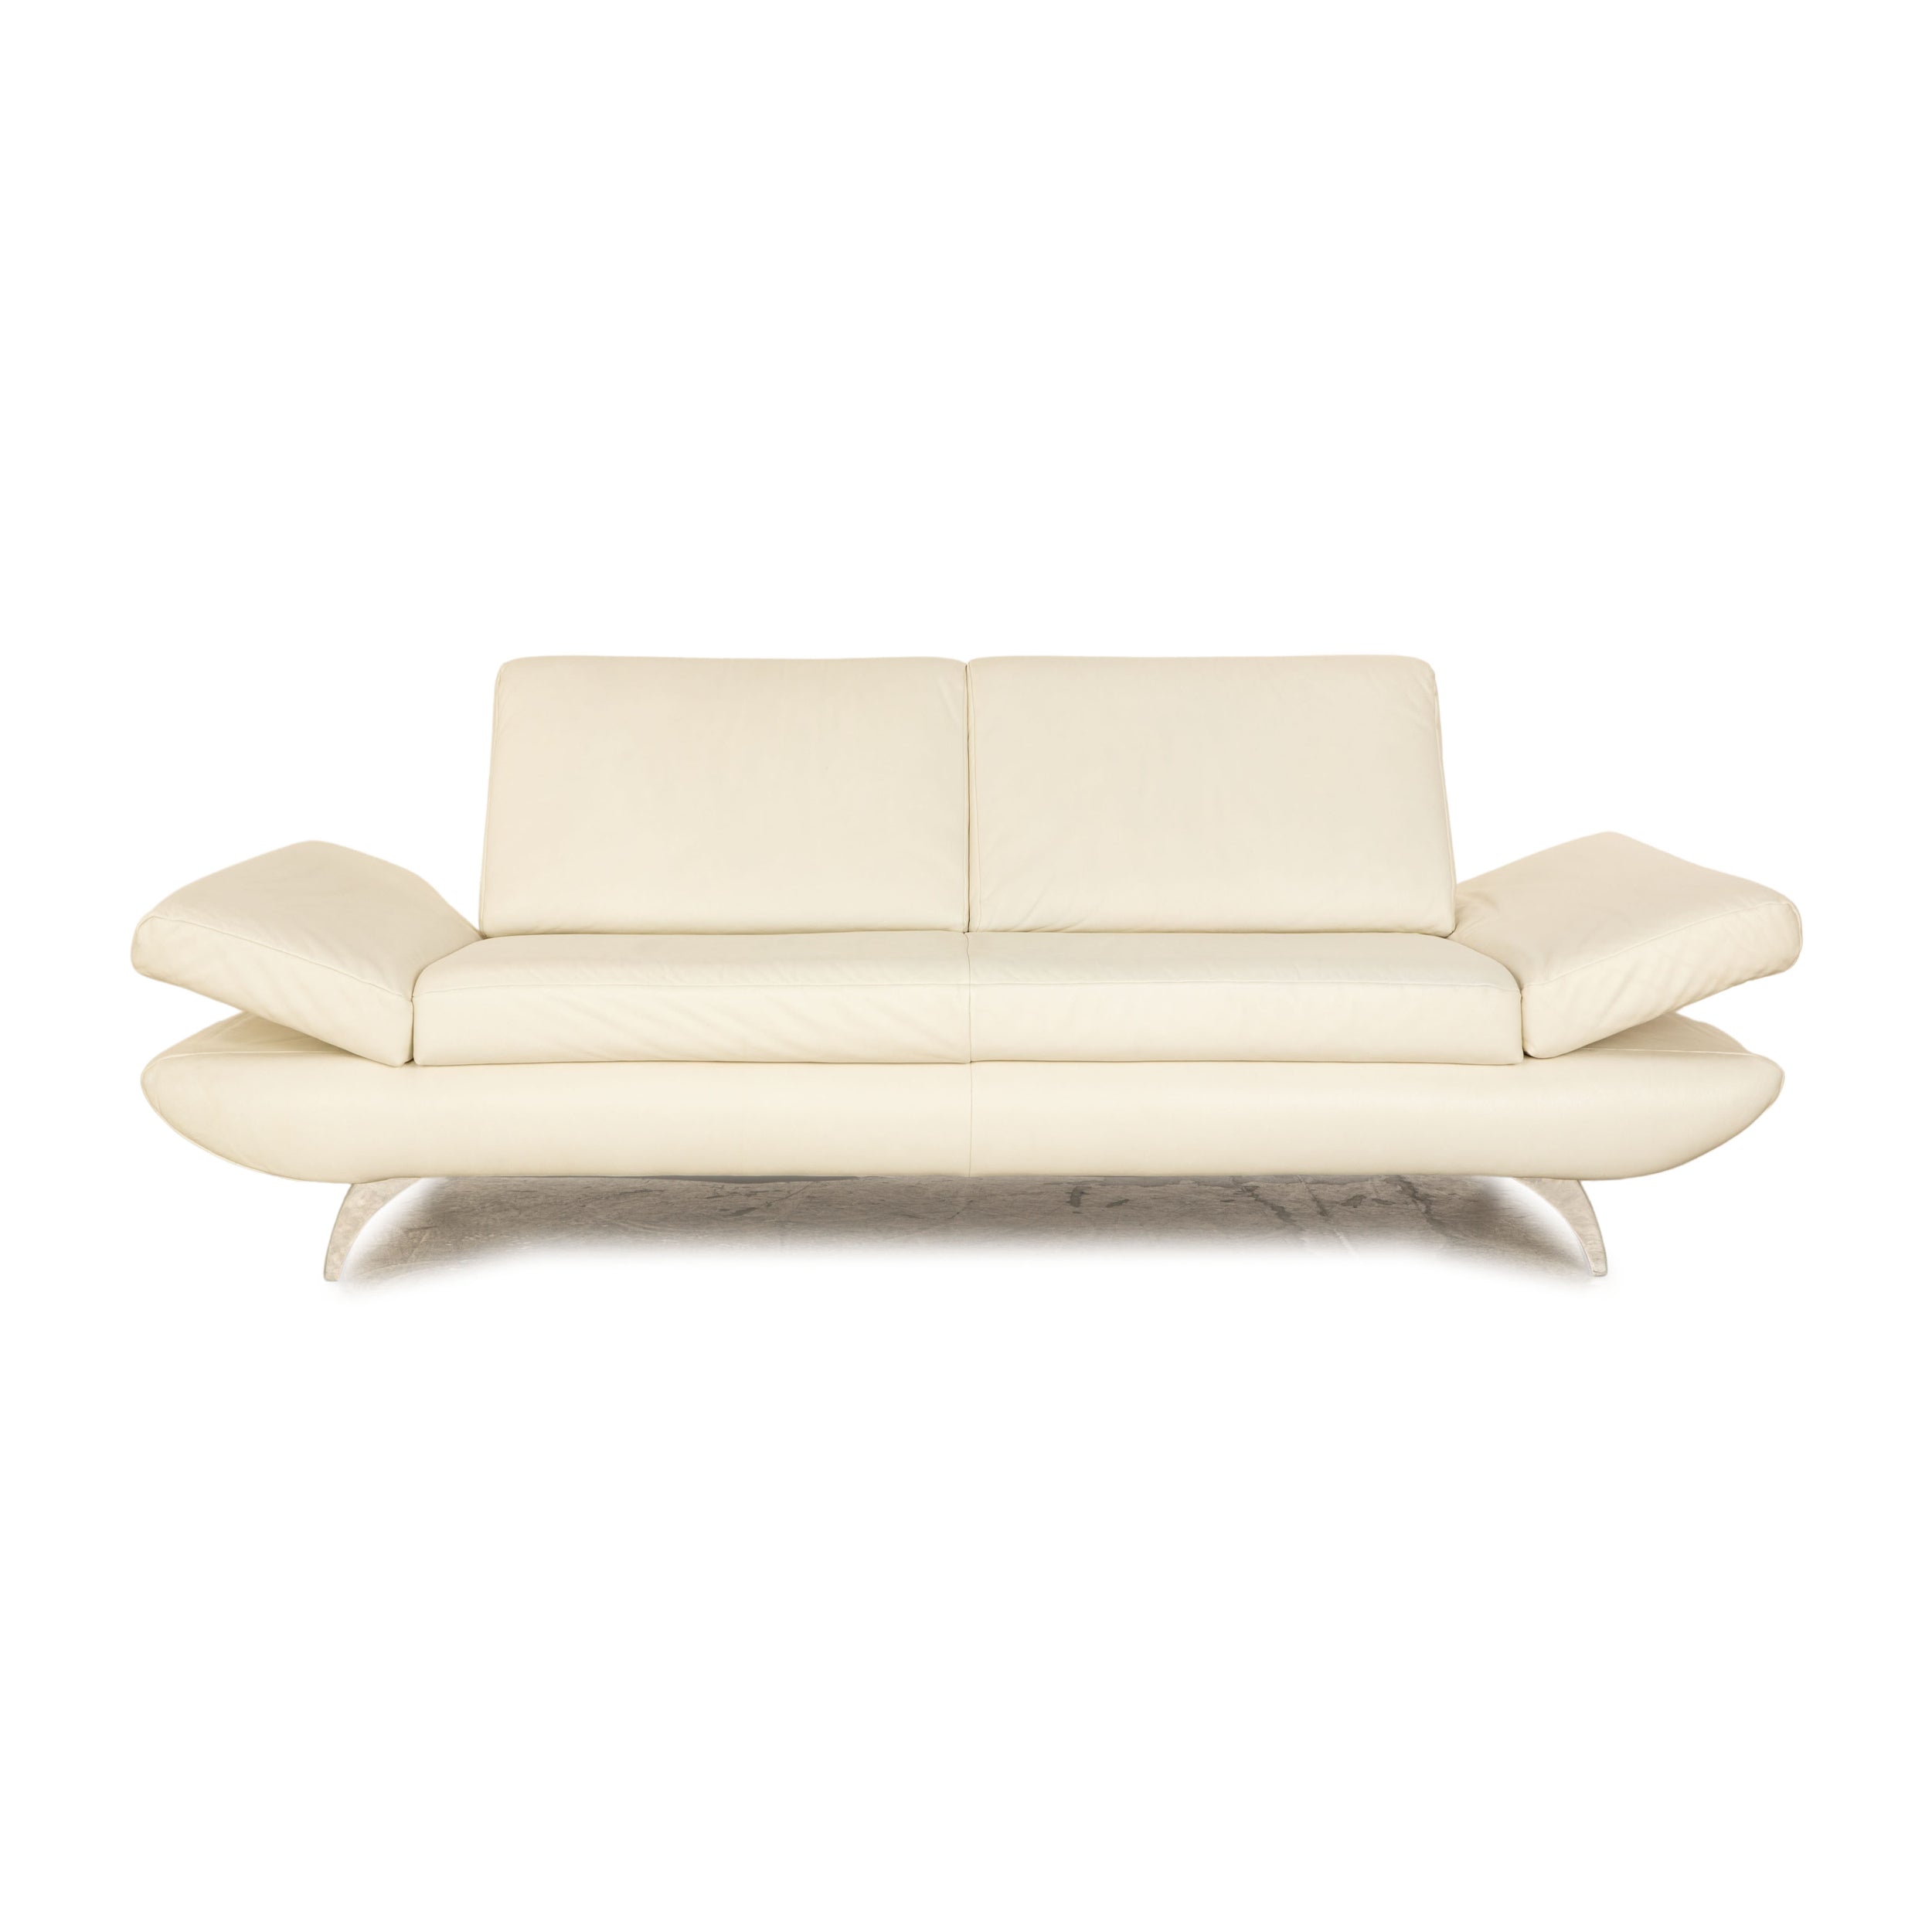 Koinor Leder Zweisitzer Creme manuelle Funktion Sofa Couch